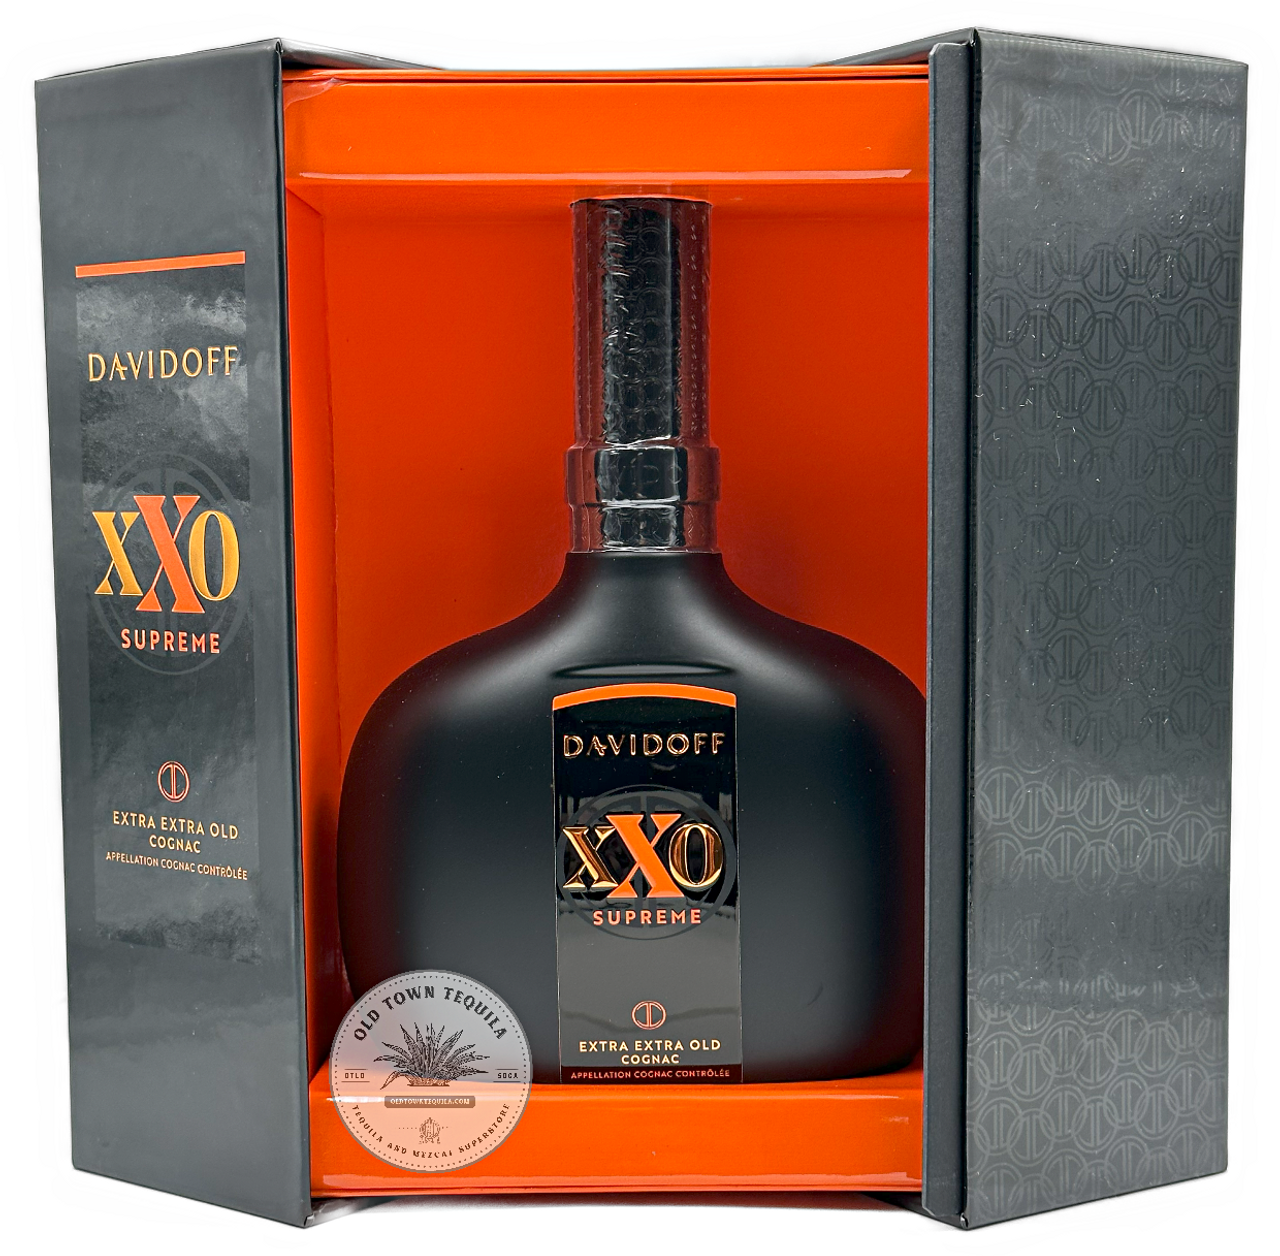 Hennessy Cognac XXO - Prestigious Cognac